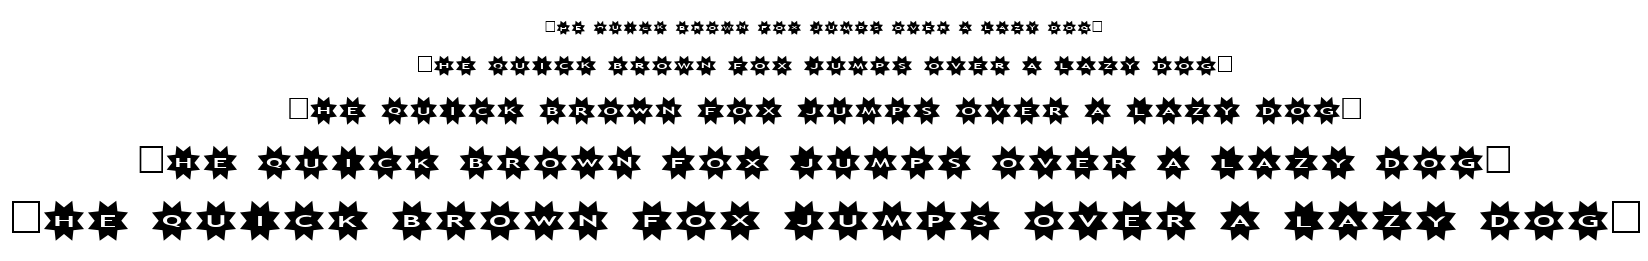 alphaahapes stars 3 font